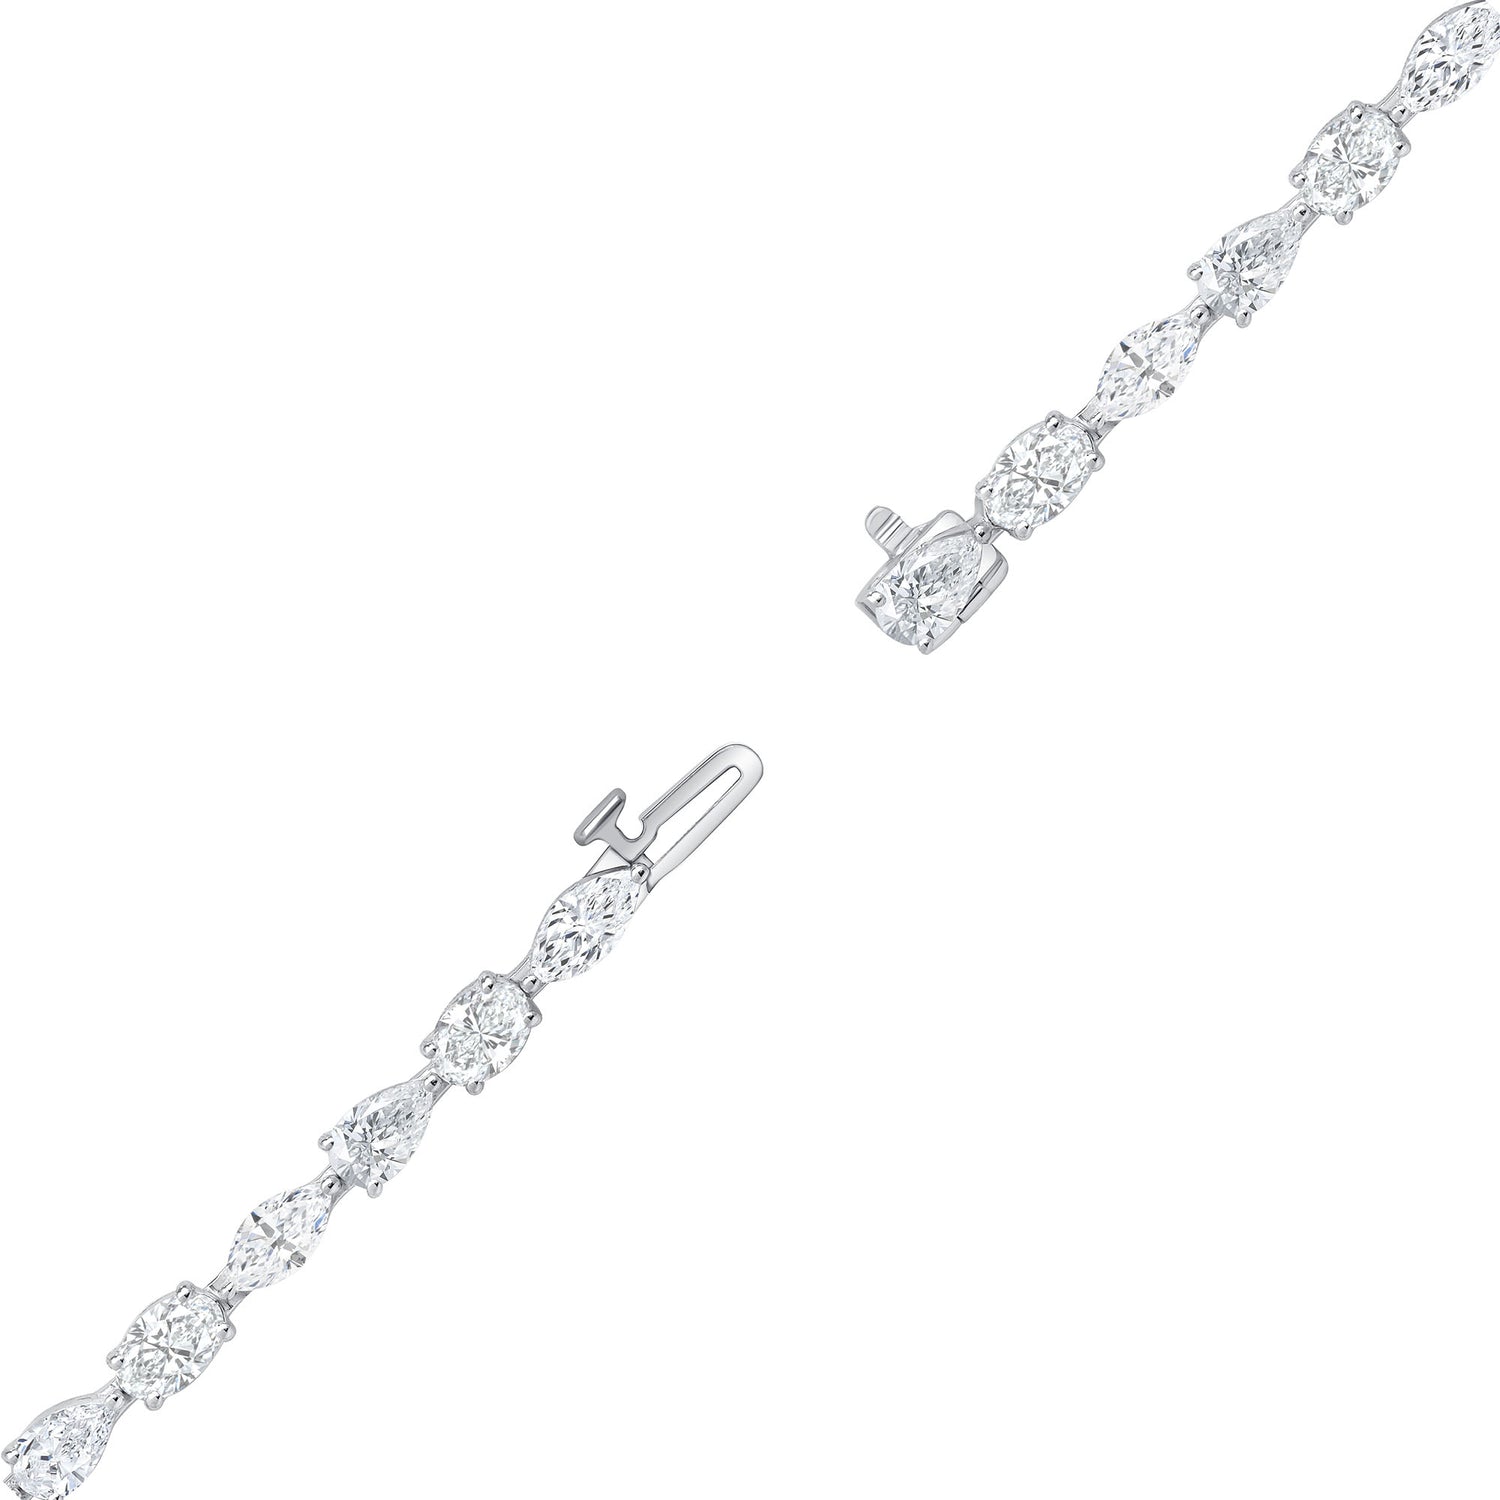 18K White Gold 15.73 CT Mix-cut Diamond Tennis Necklace